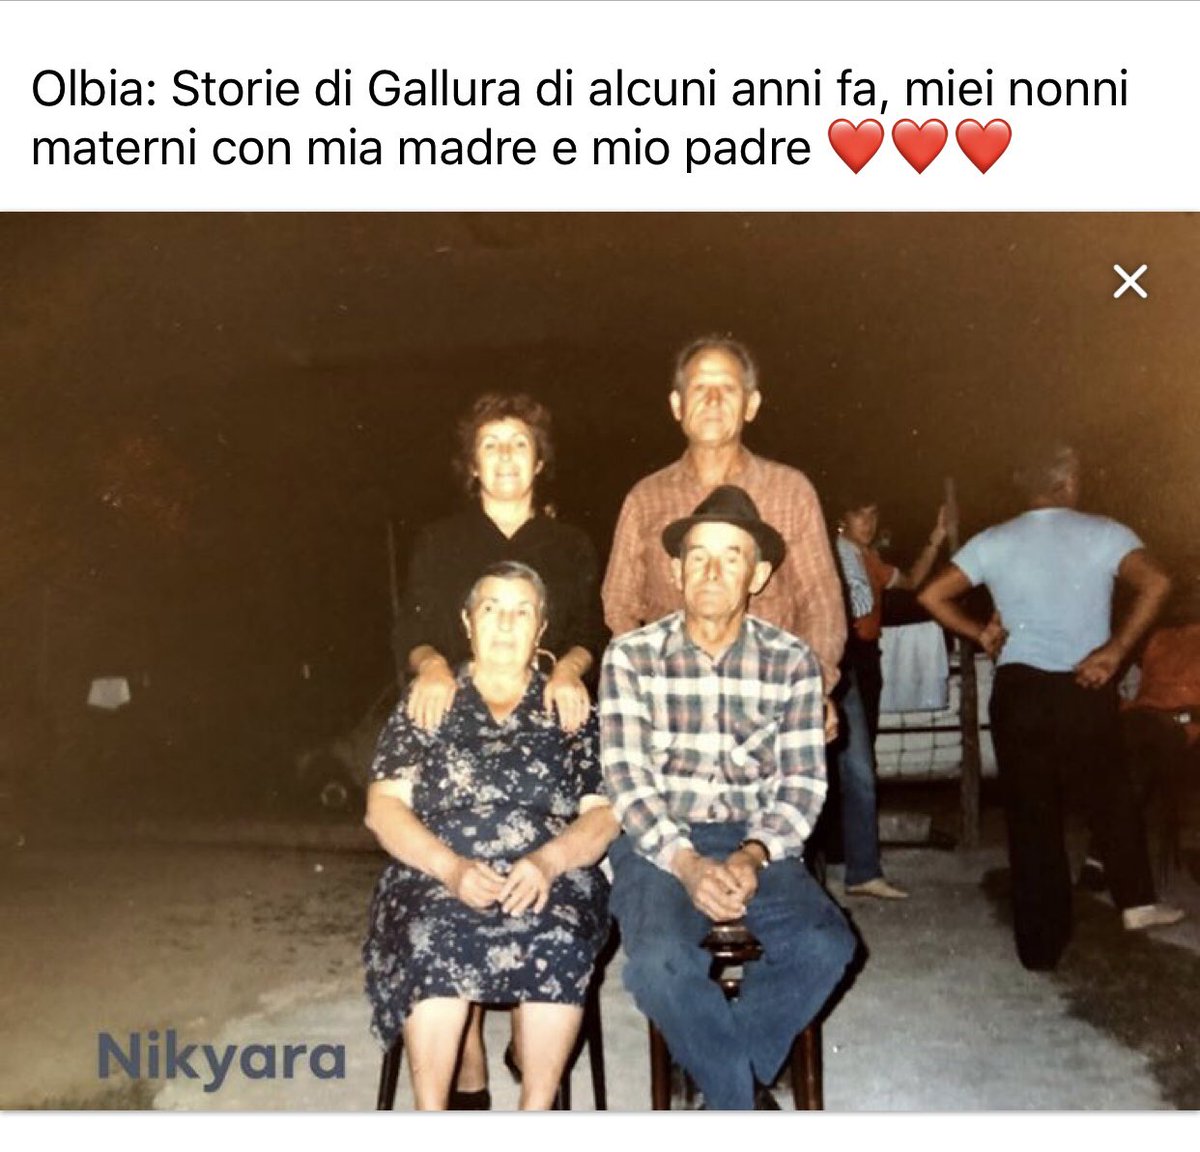 #storiedigallura #sardegna #olbia #ricordi #lanostrastoria #galluresità #vecchiricordi❤ #lepersonechecontano #famiglia #family #lifestyle #history #sardinia